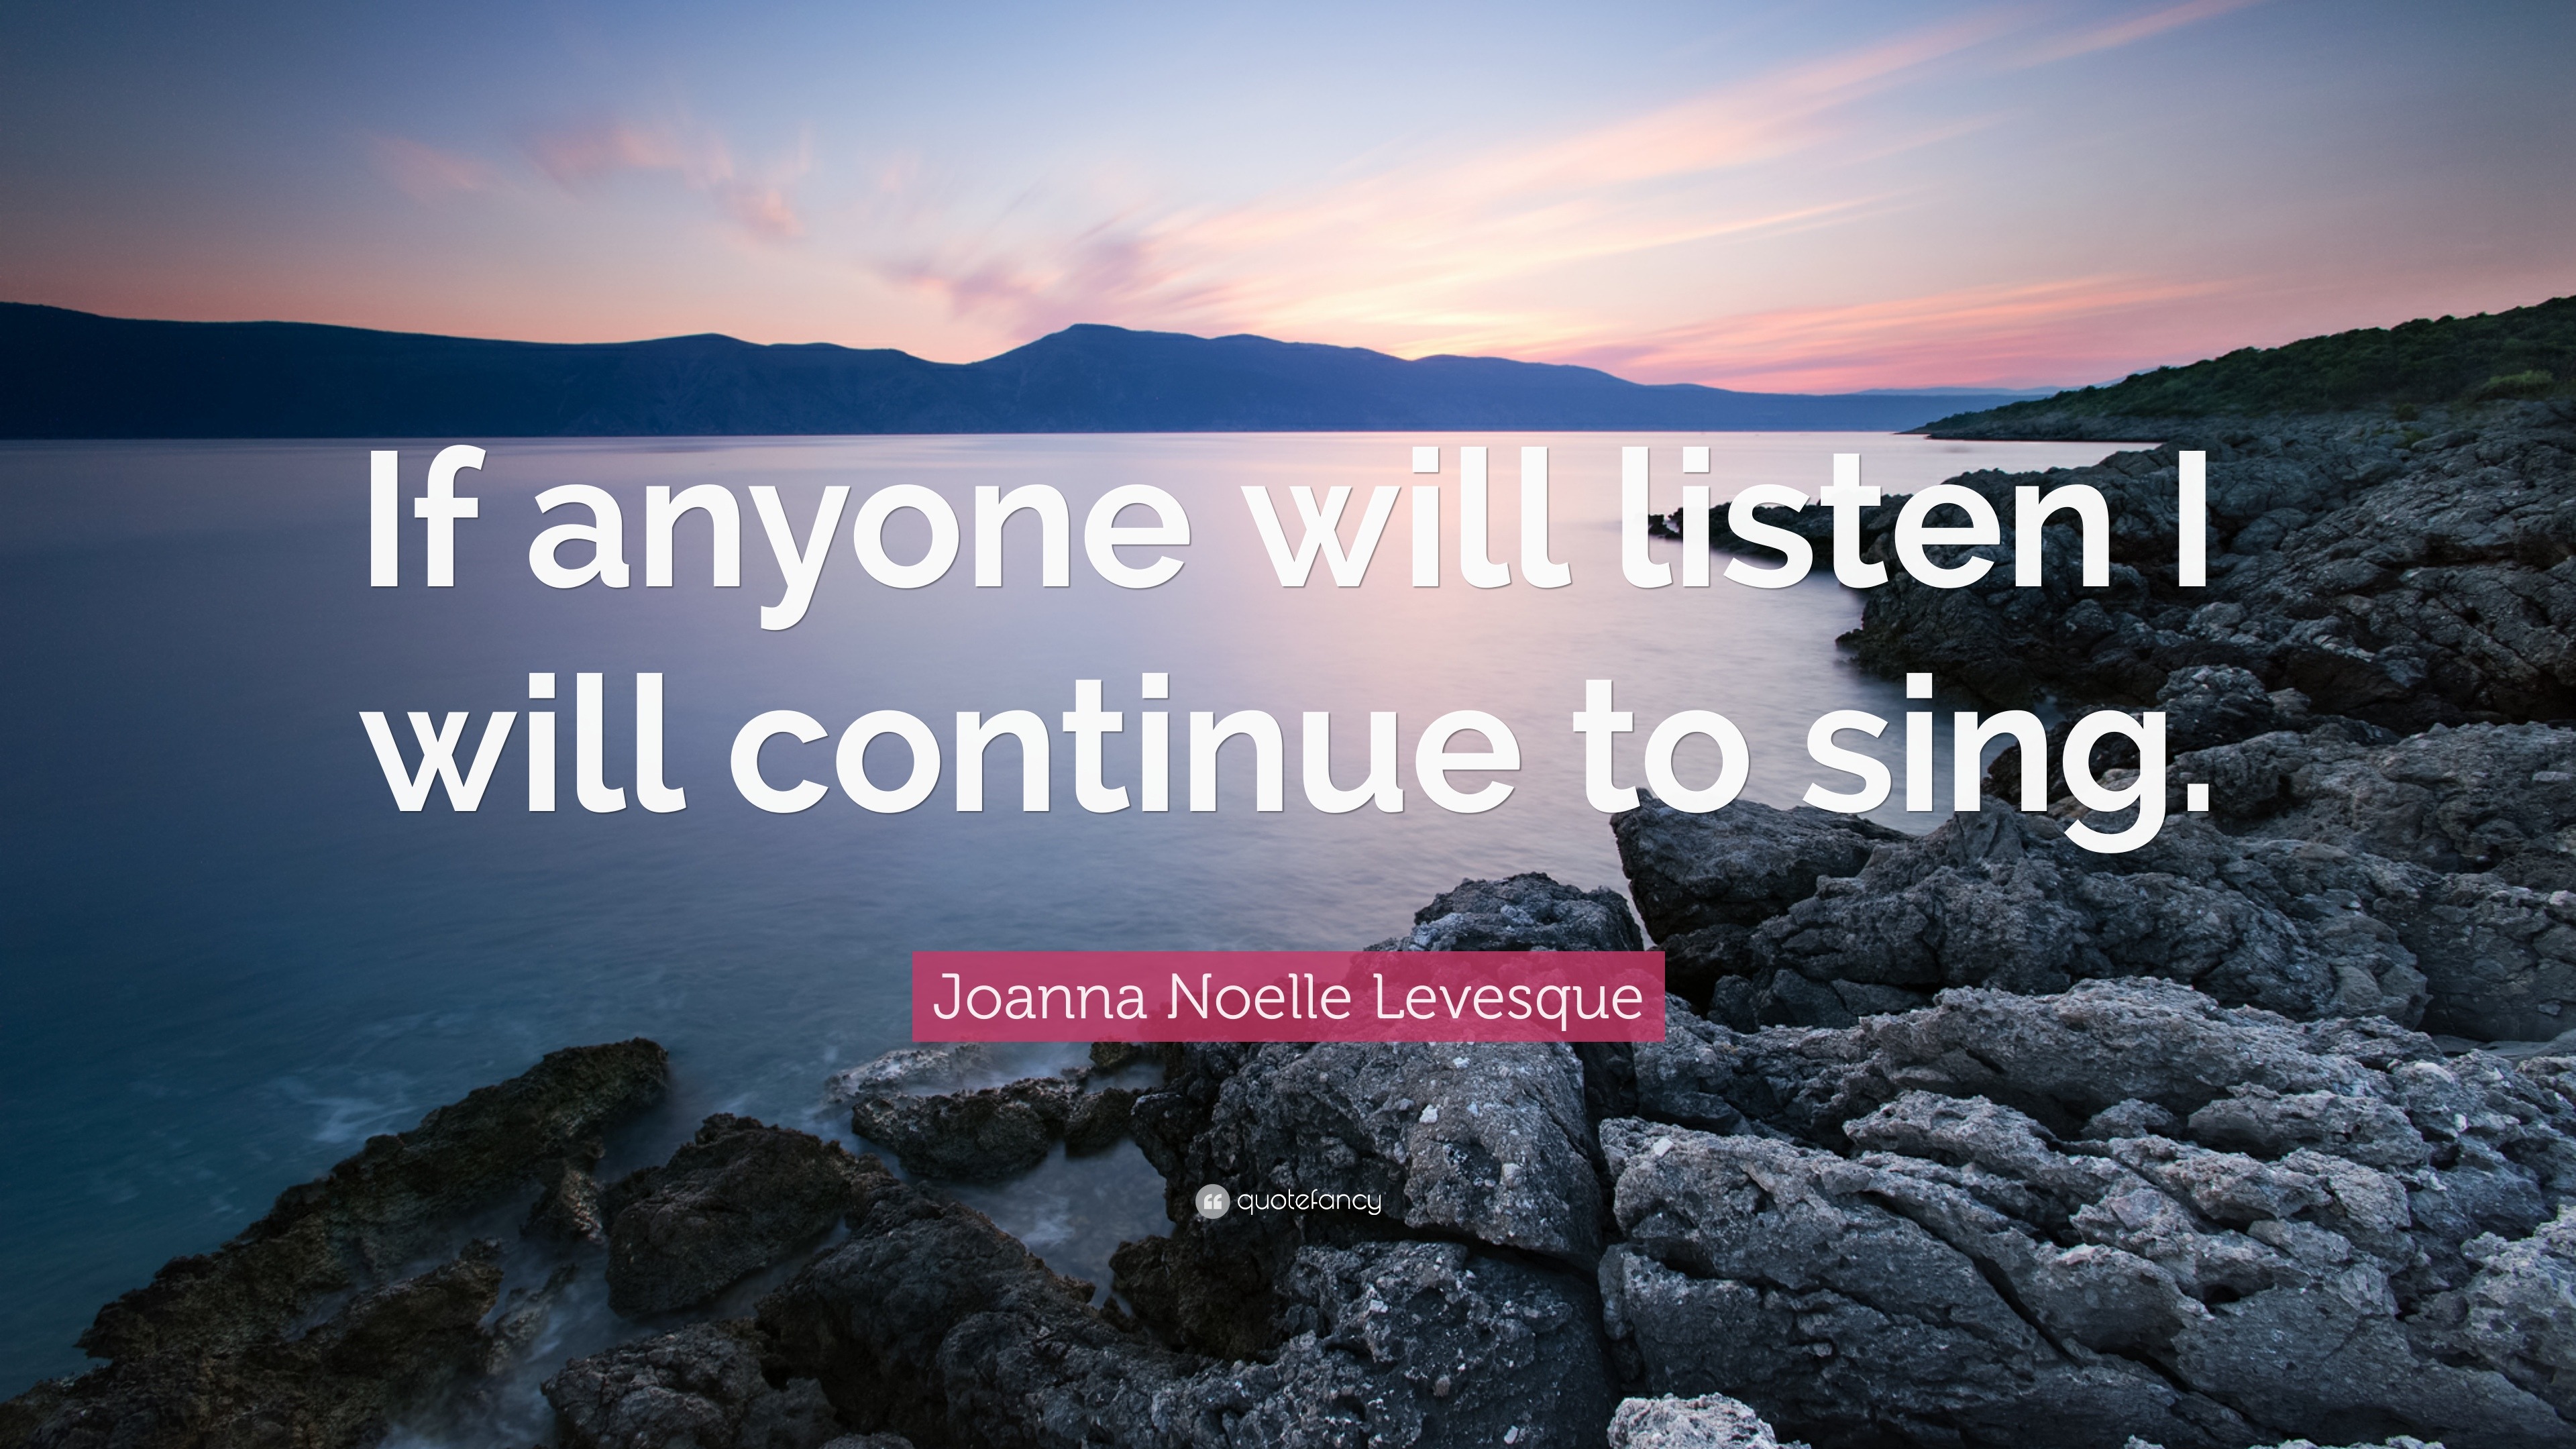 Joanna Noelle Levesque Quote: “If